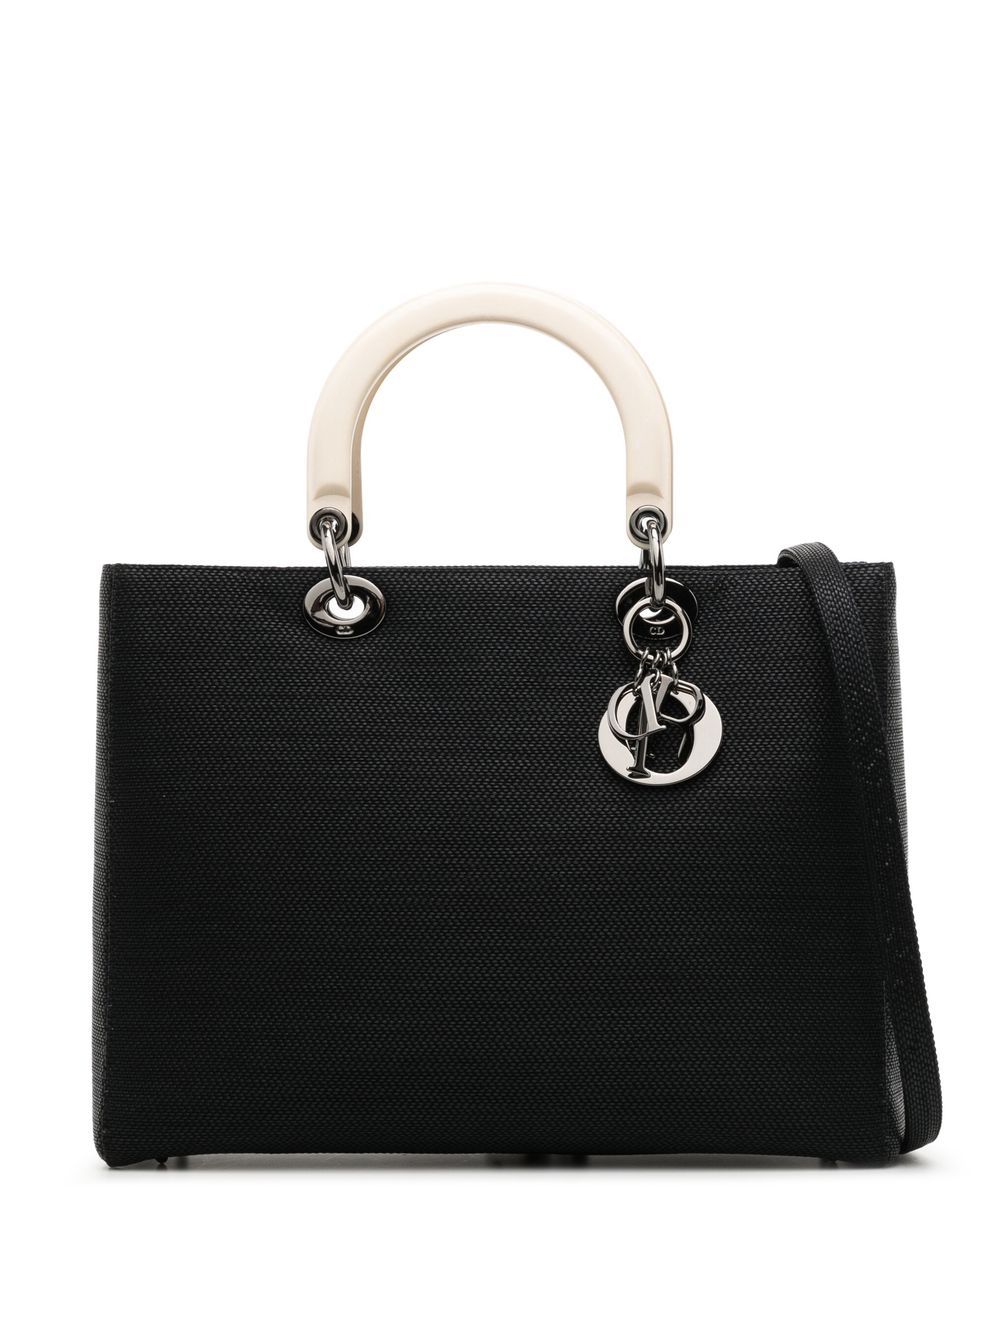 Christian Dior Lady Dior two-way bag